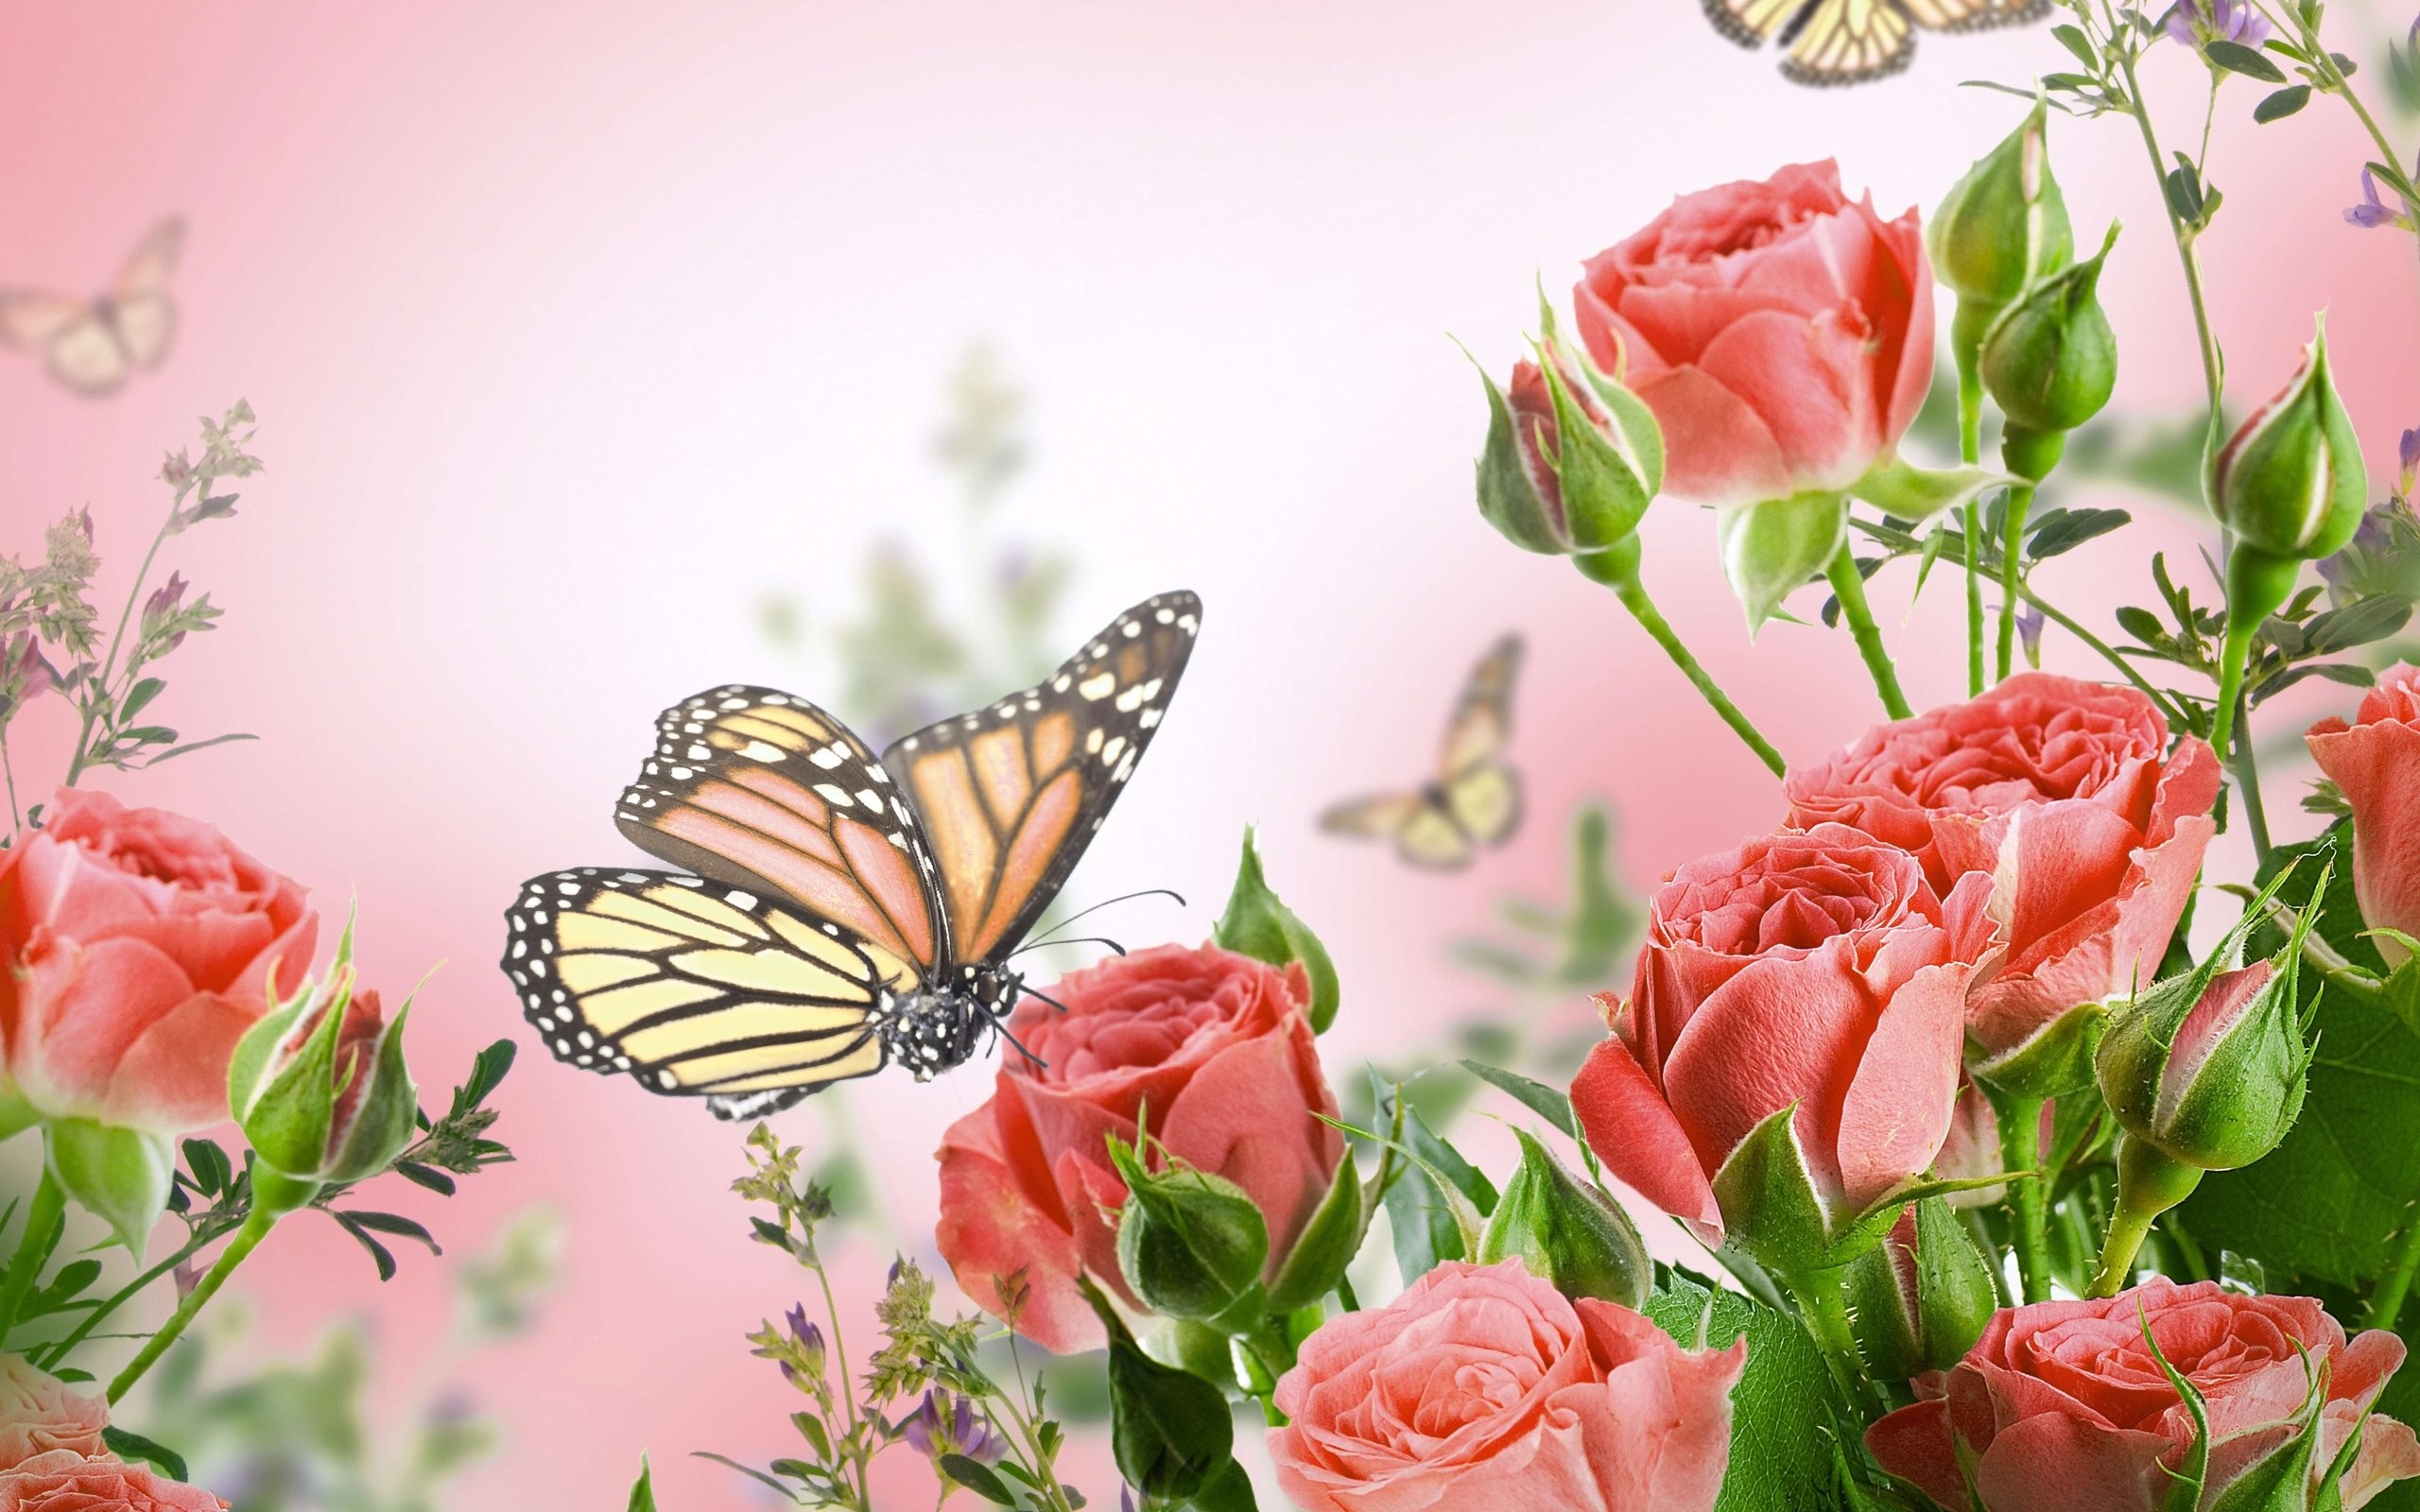 flowers and butterflies wallpaper,butterfly,moths and butterflies,insect,pink,flower